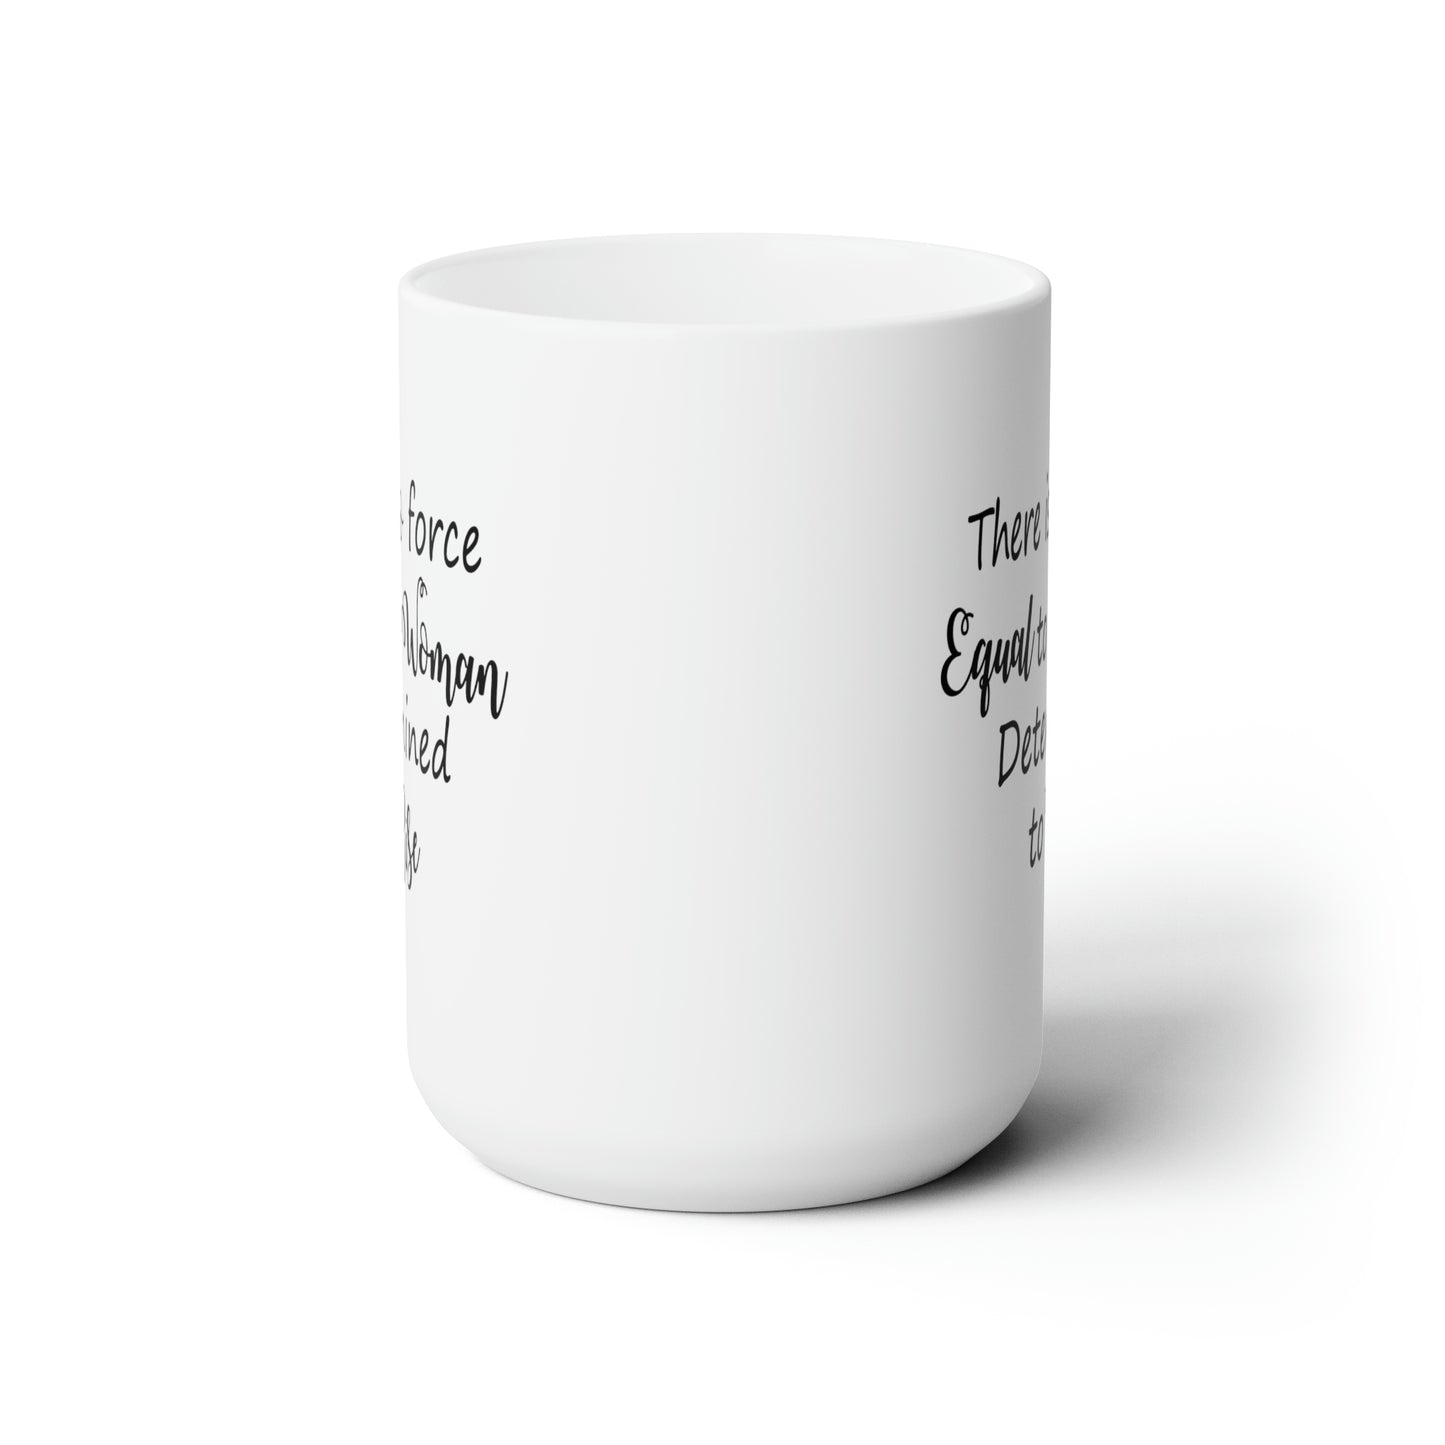 Determined Woman Coffee Mug - Double Sided White Ceramic 15oz by TheGlassyLass.com